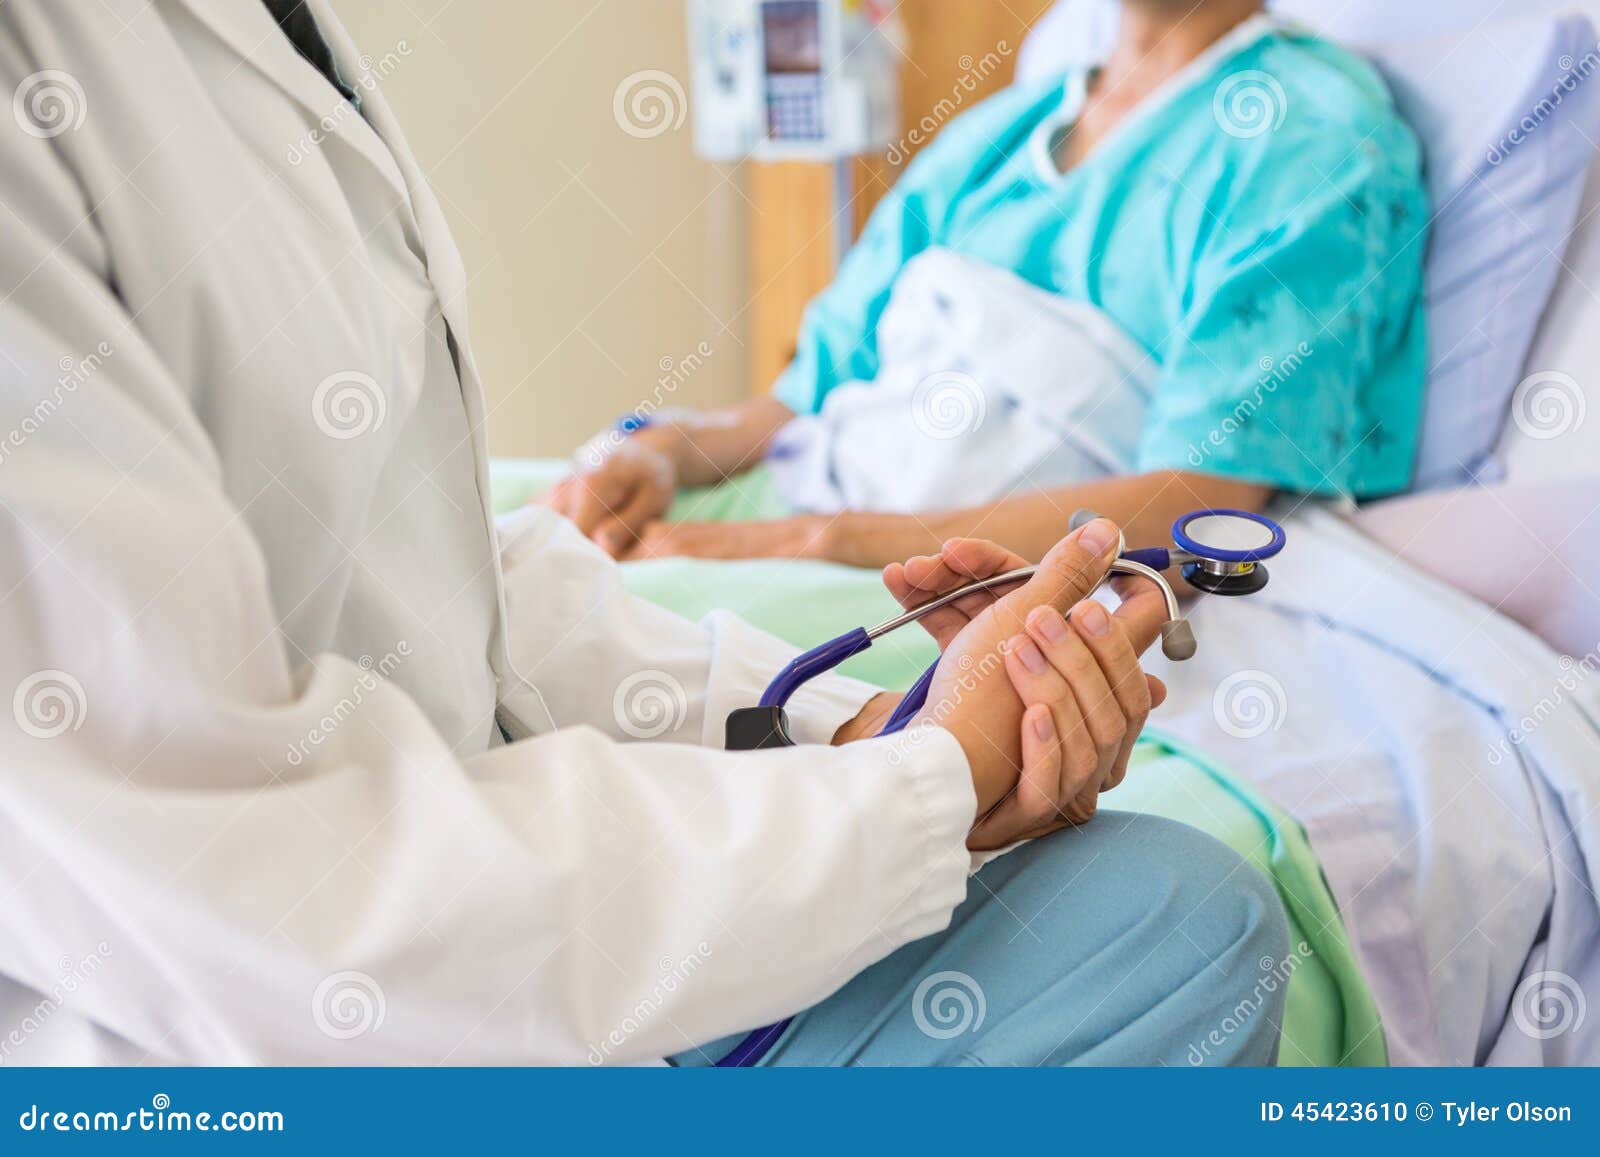 El Doctor De Sexo Femenino Sitting With Patient En Cama De Hospital